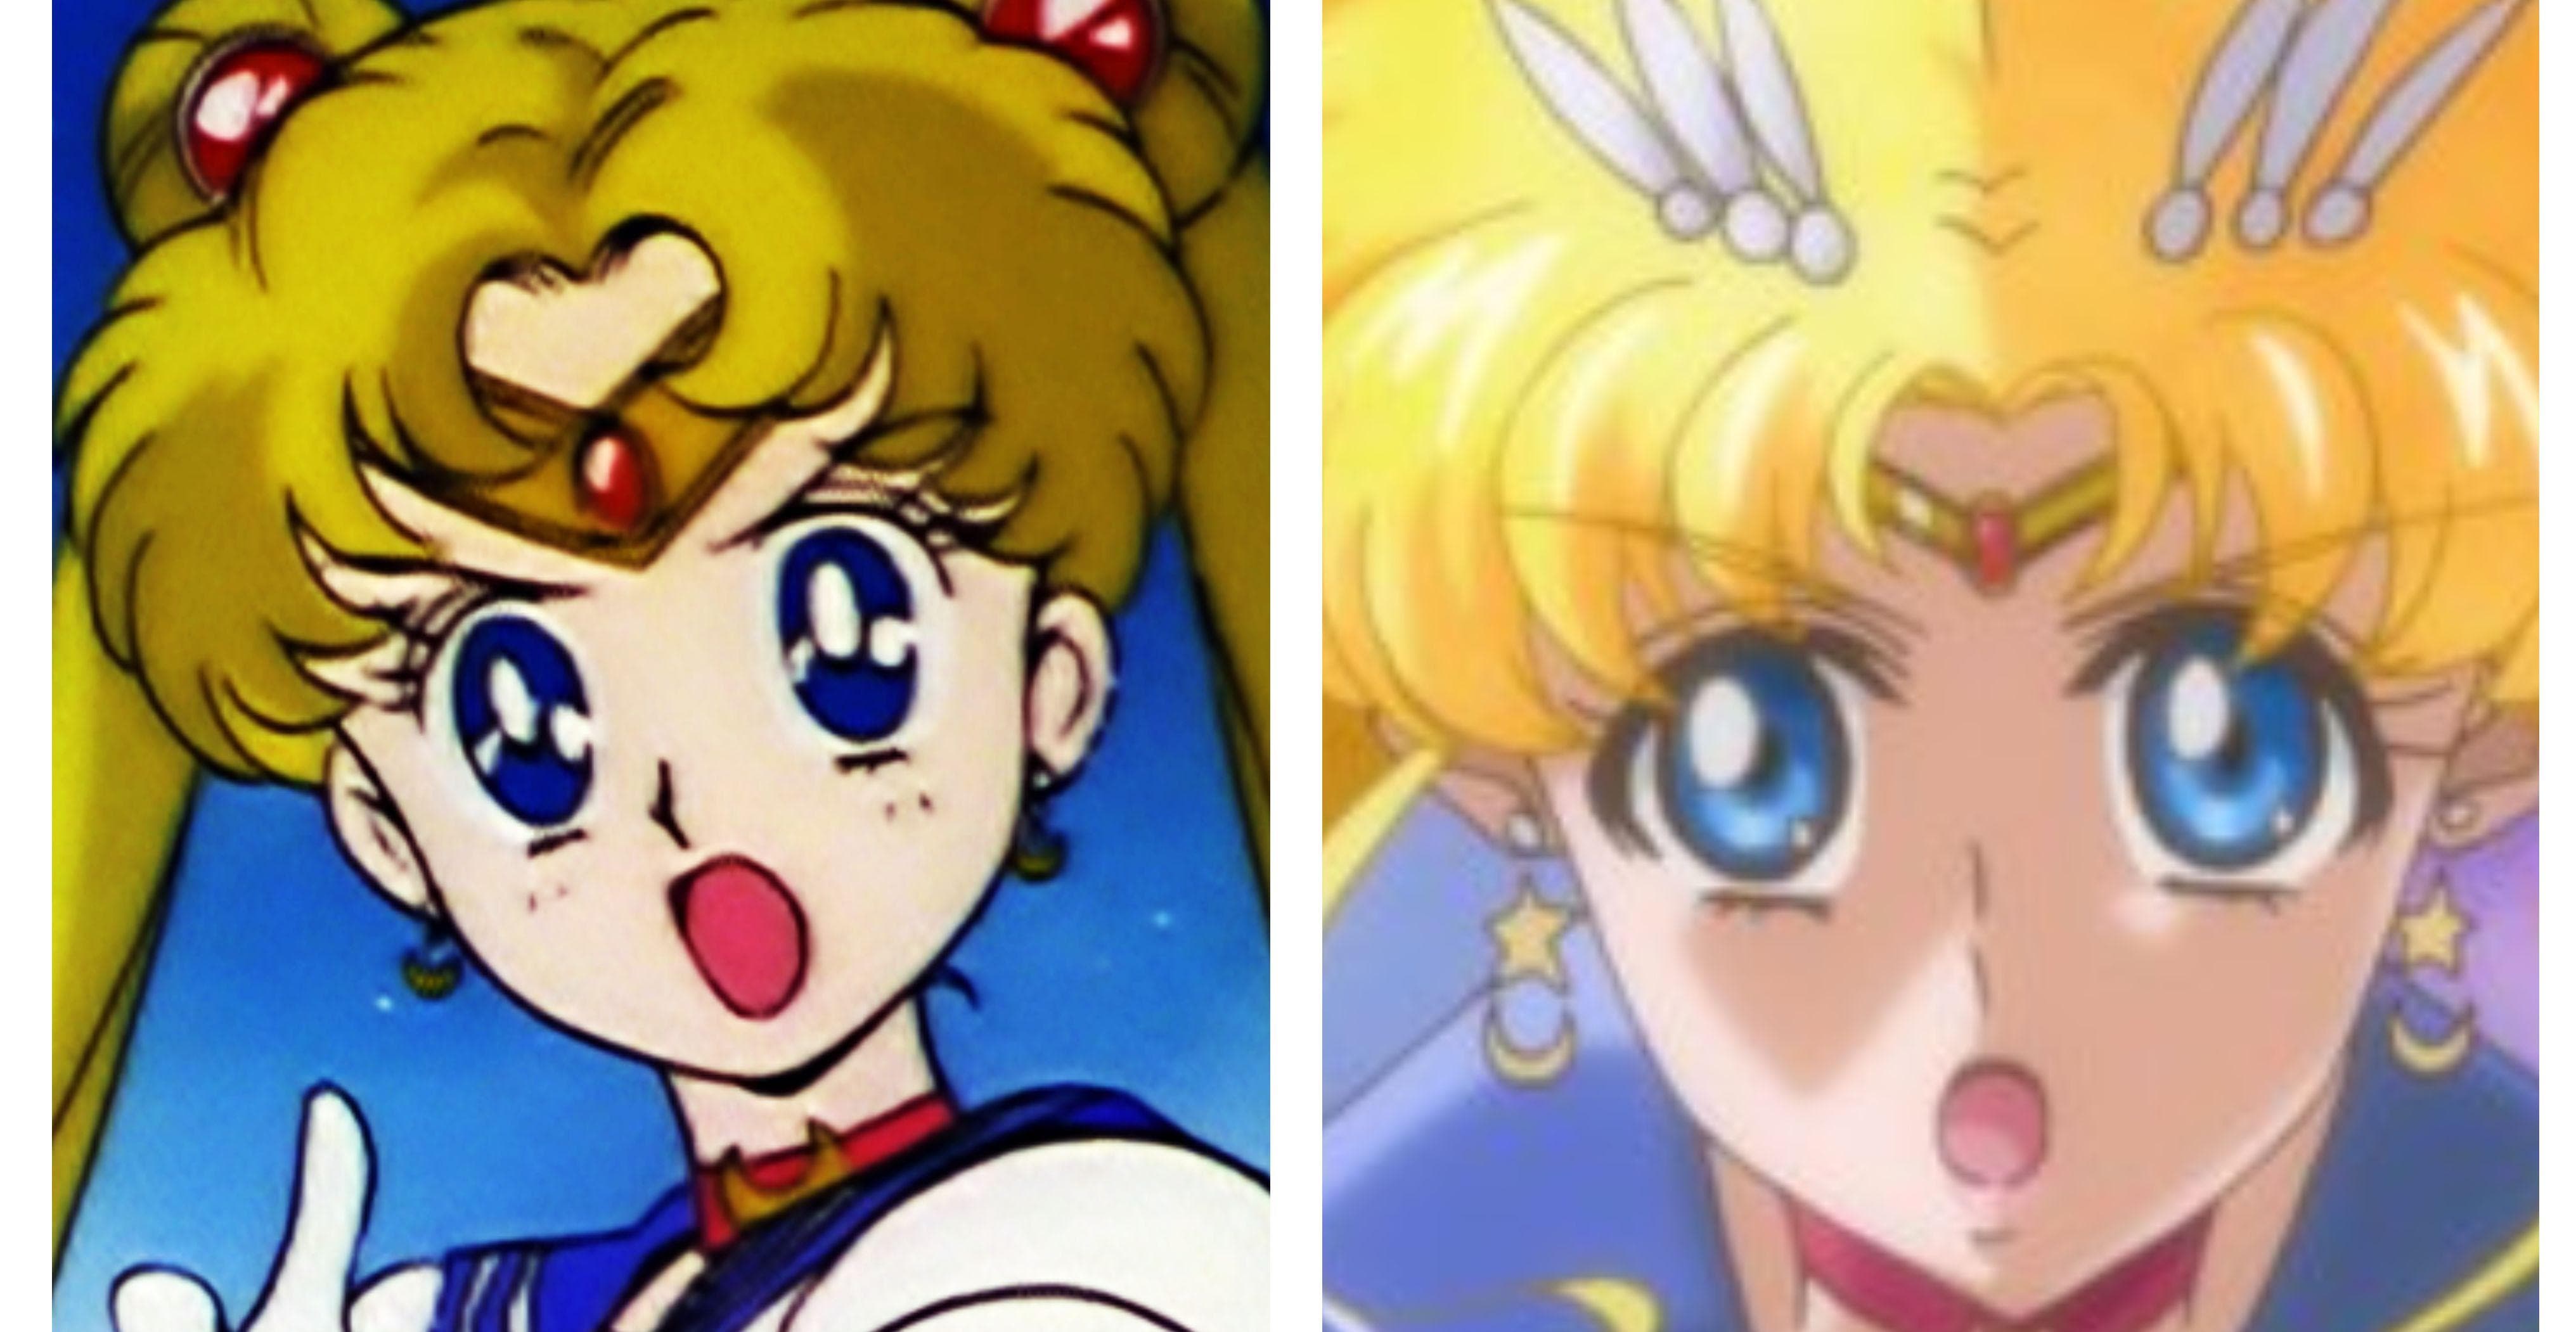 Anime styles through the decades